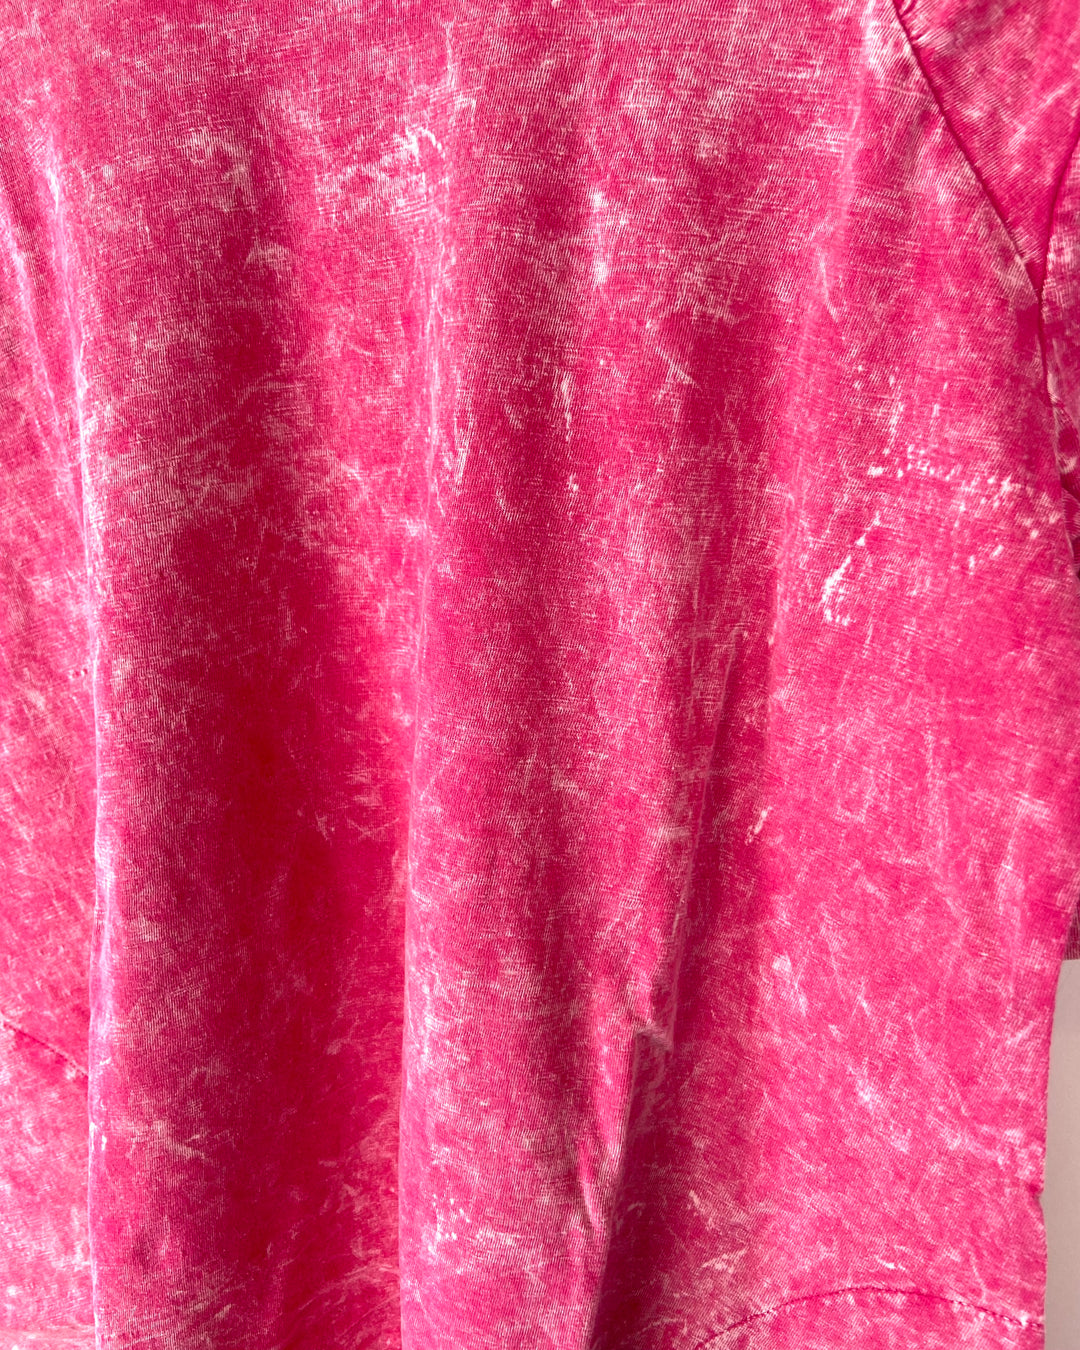 Bright Pink T-Shirt - Size 6-8